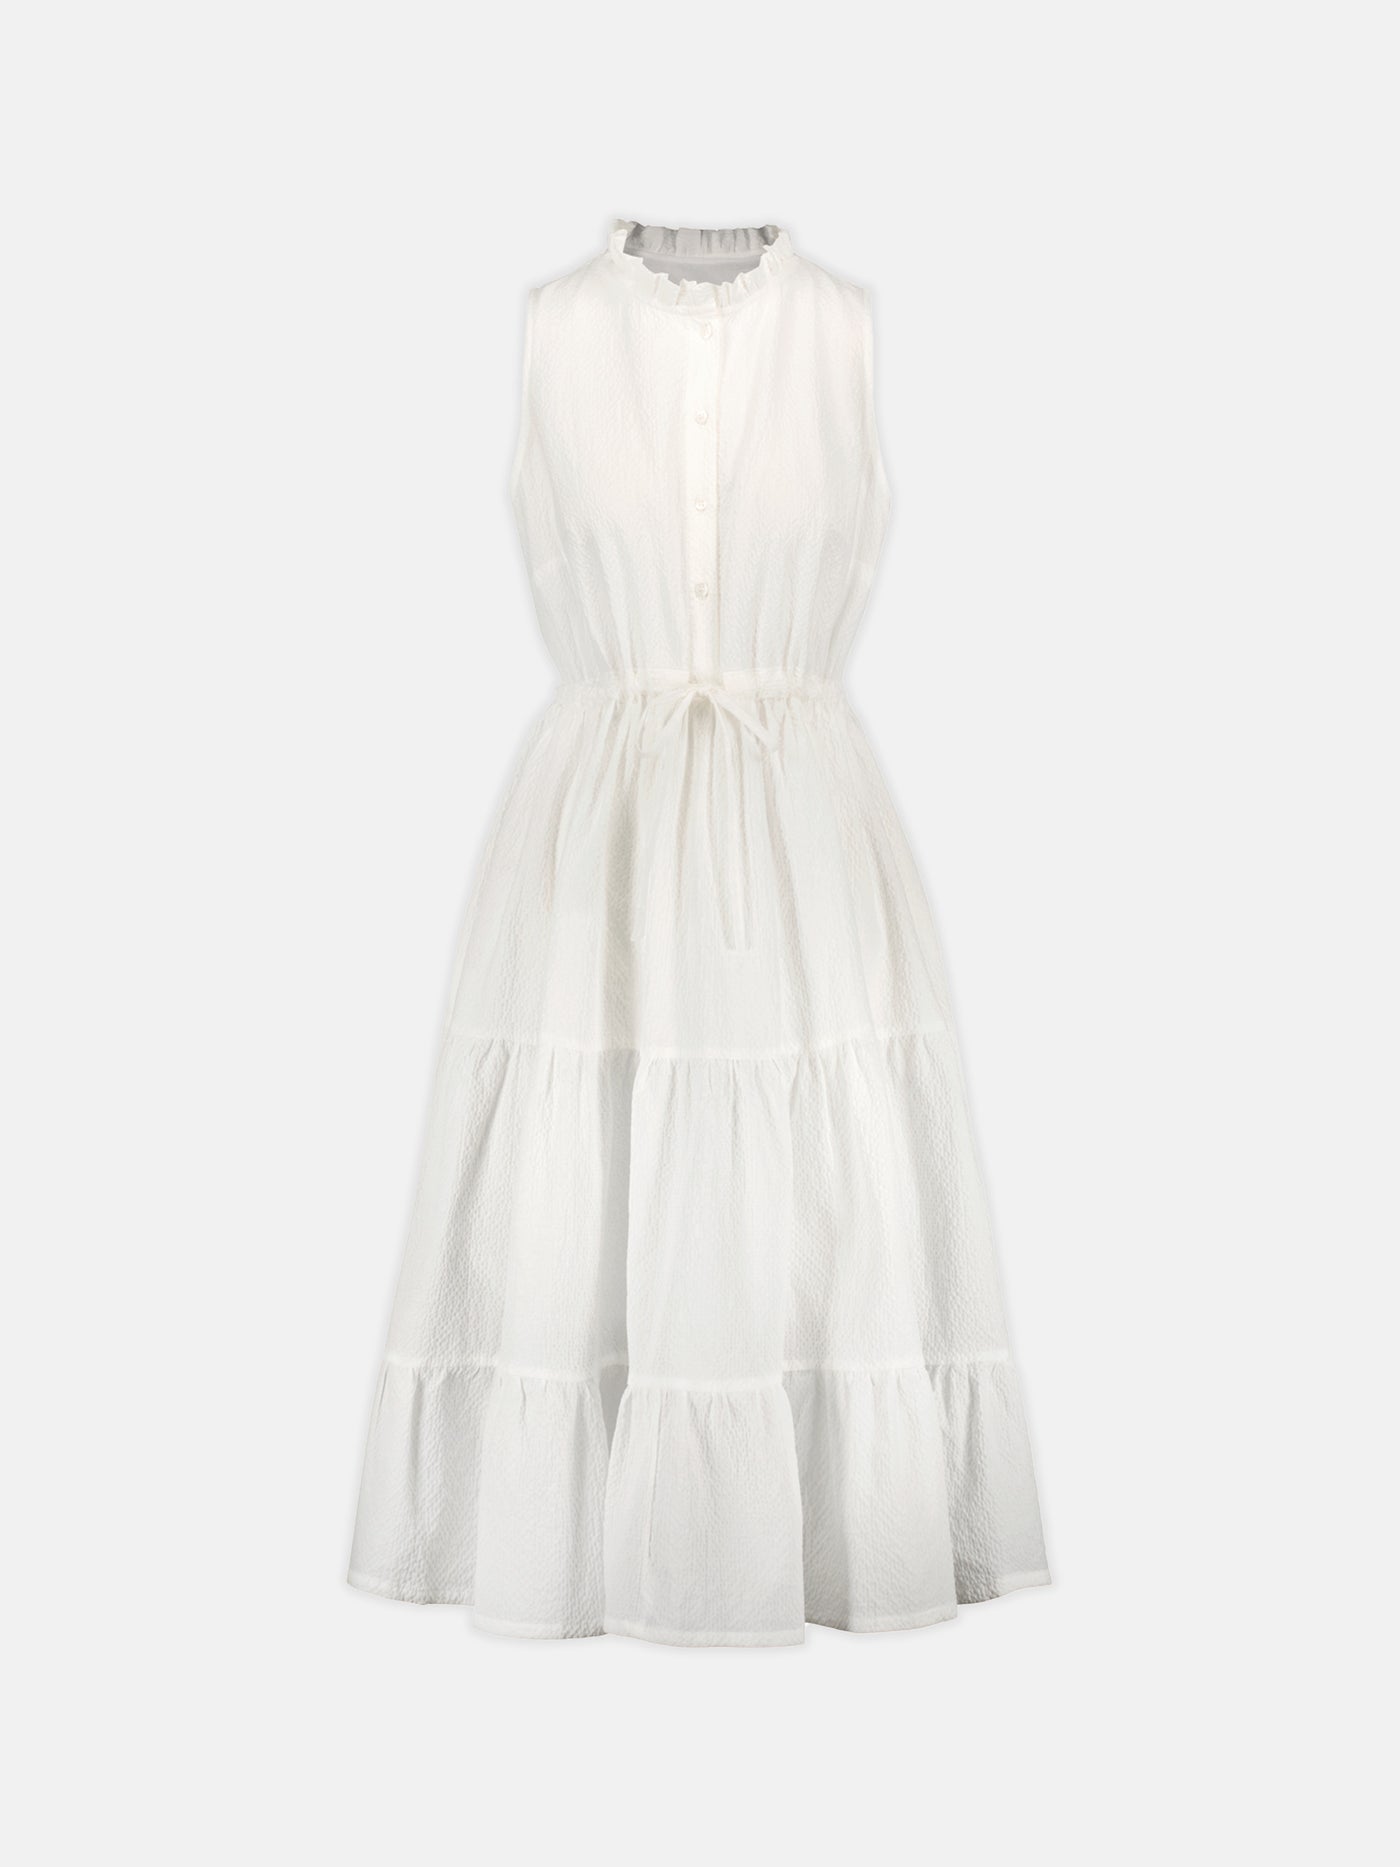 Edith dress, white